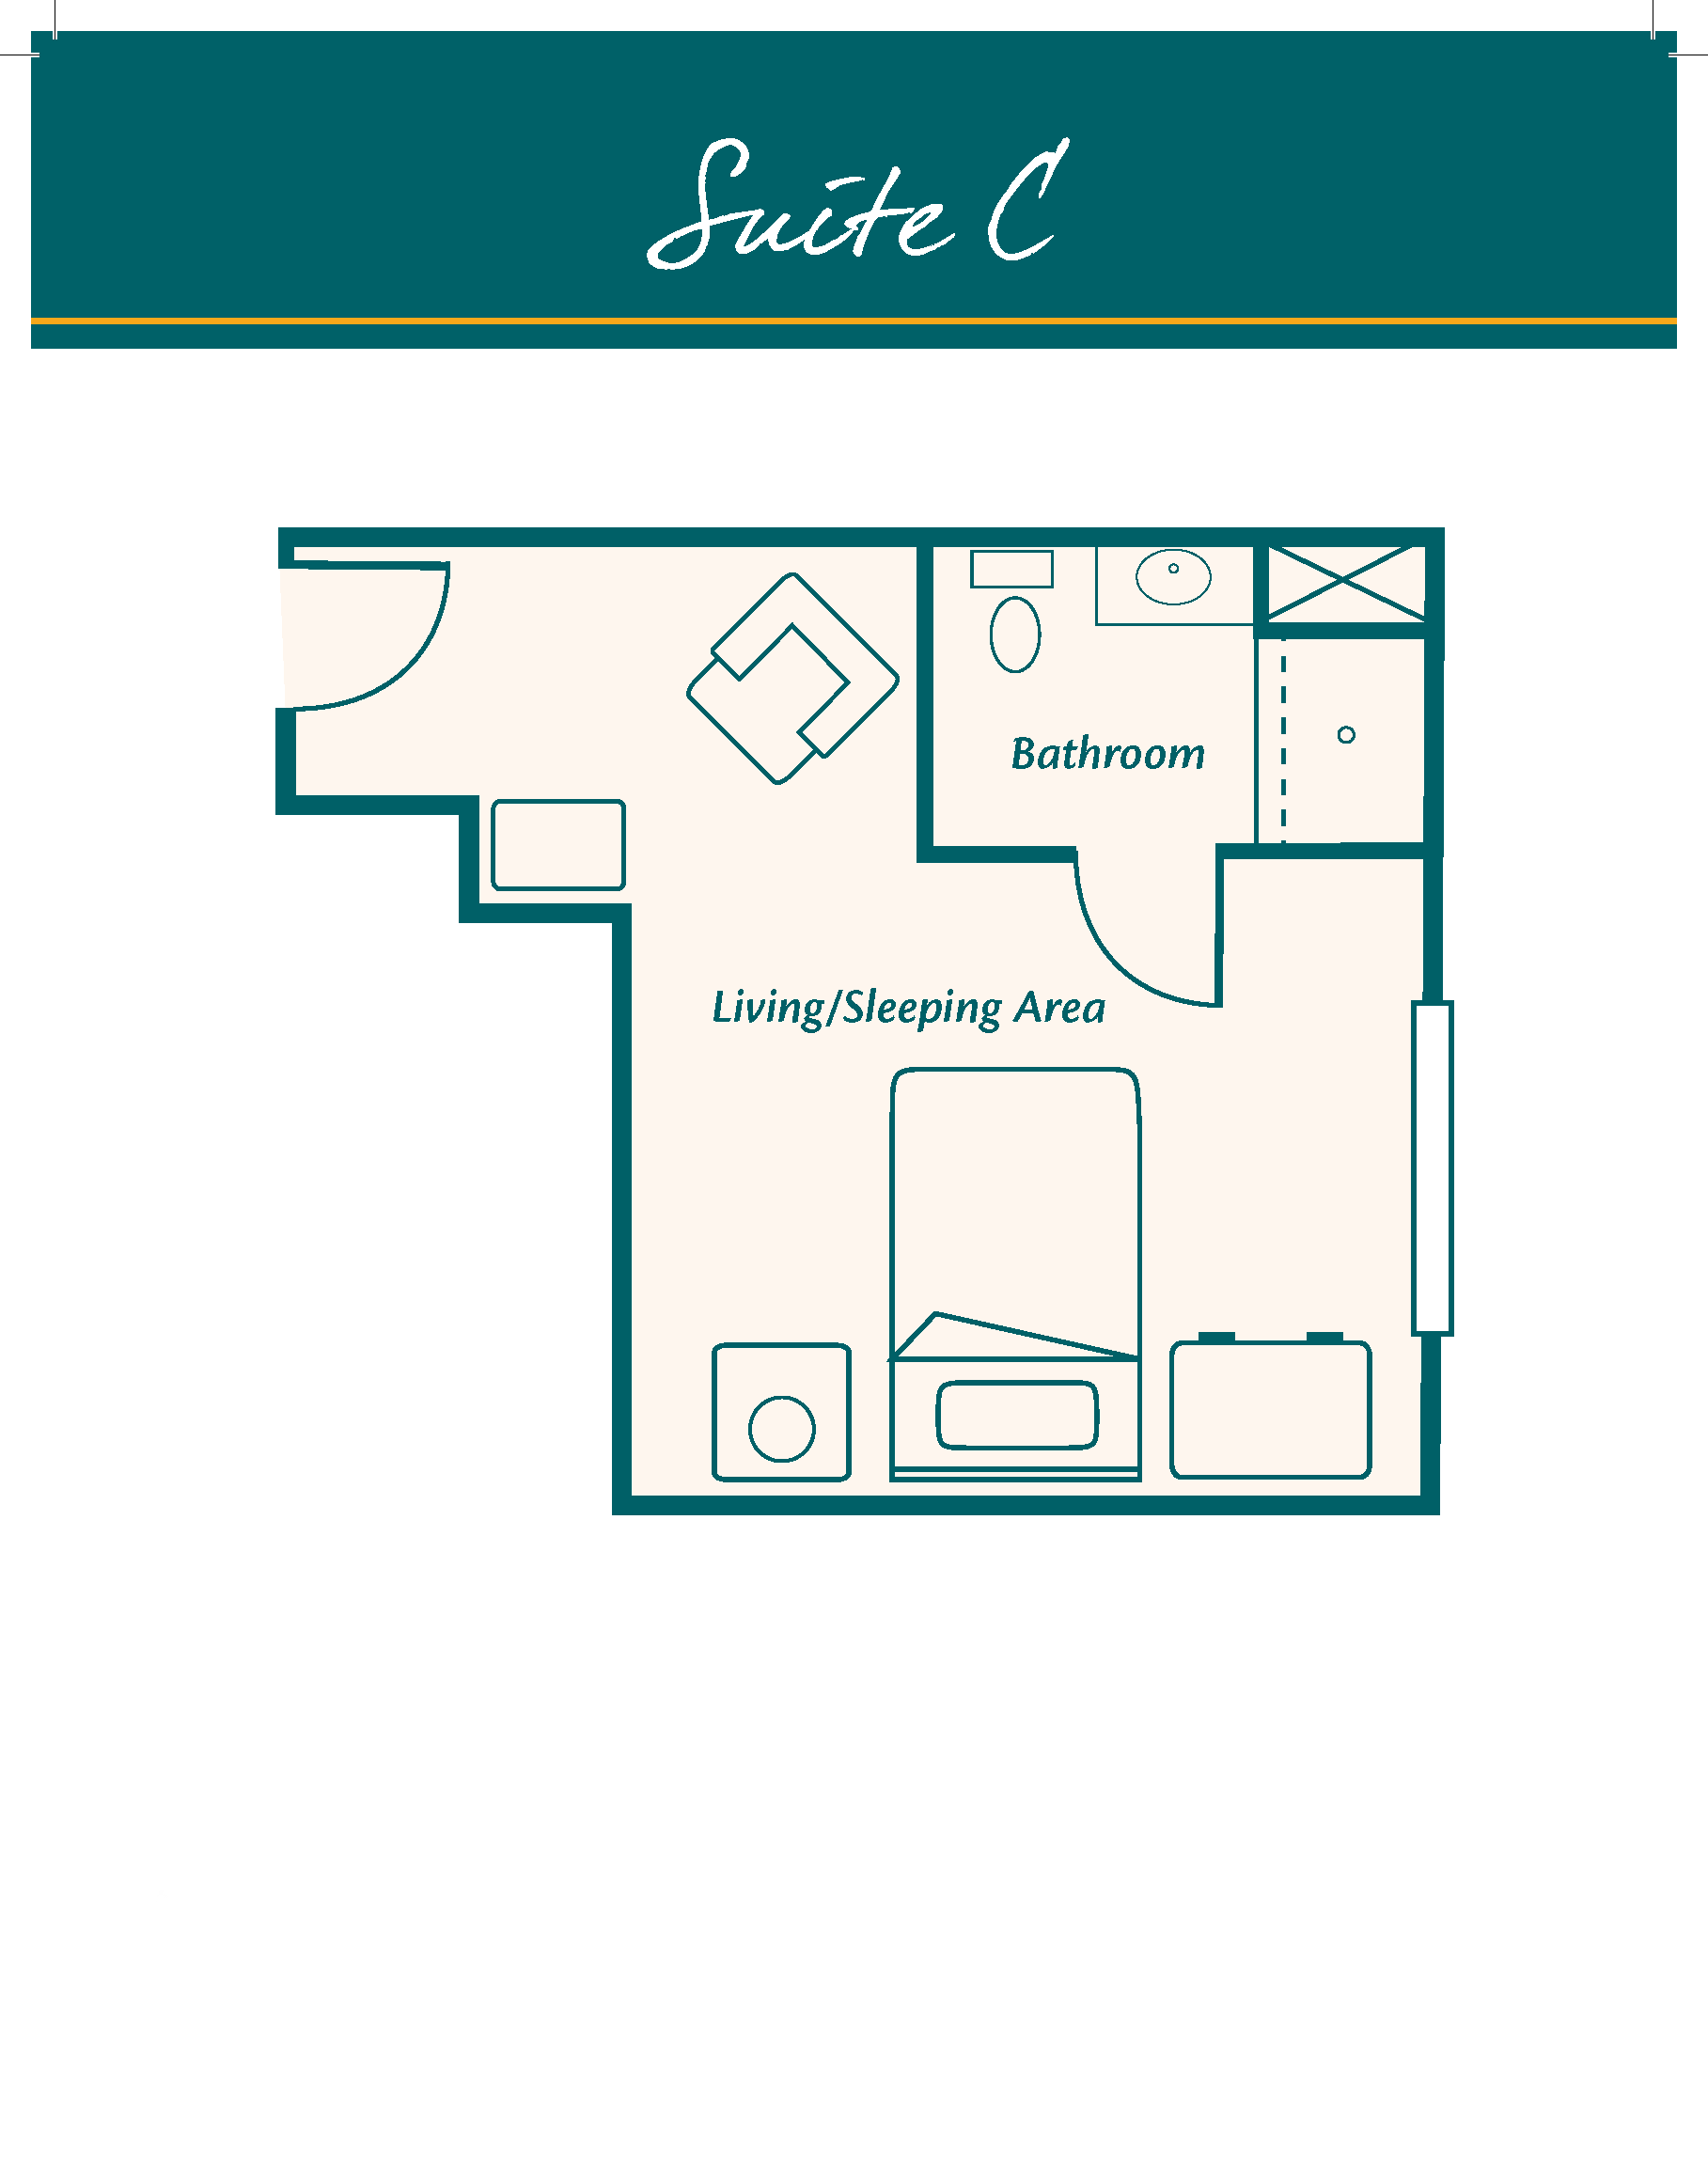 HarborChase of Gainesville Floor Plan-suite-c